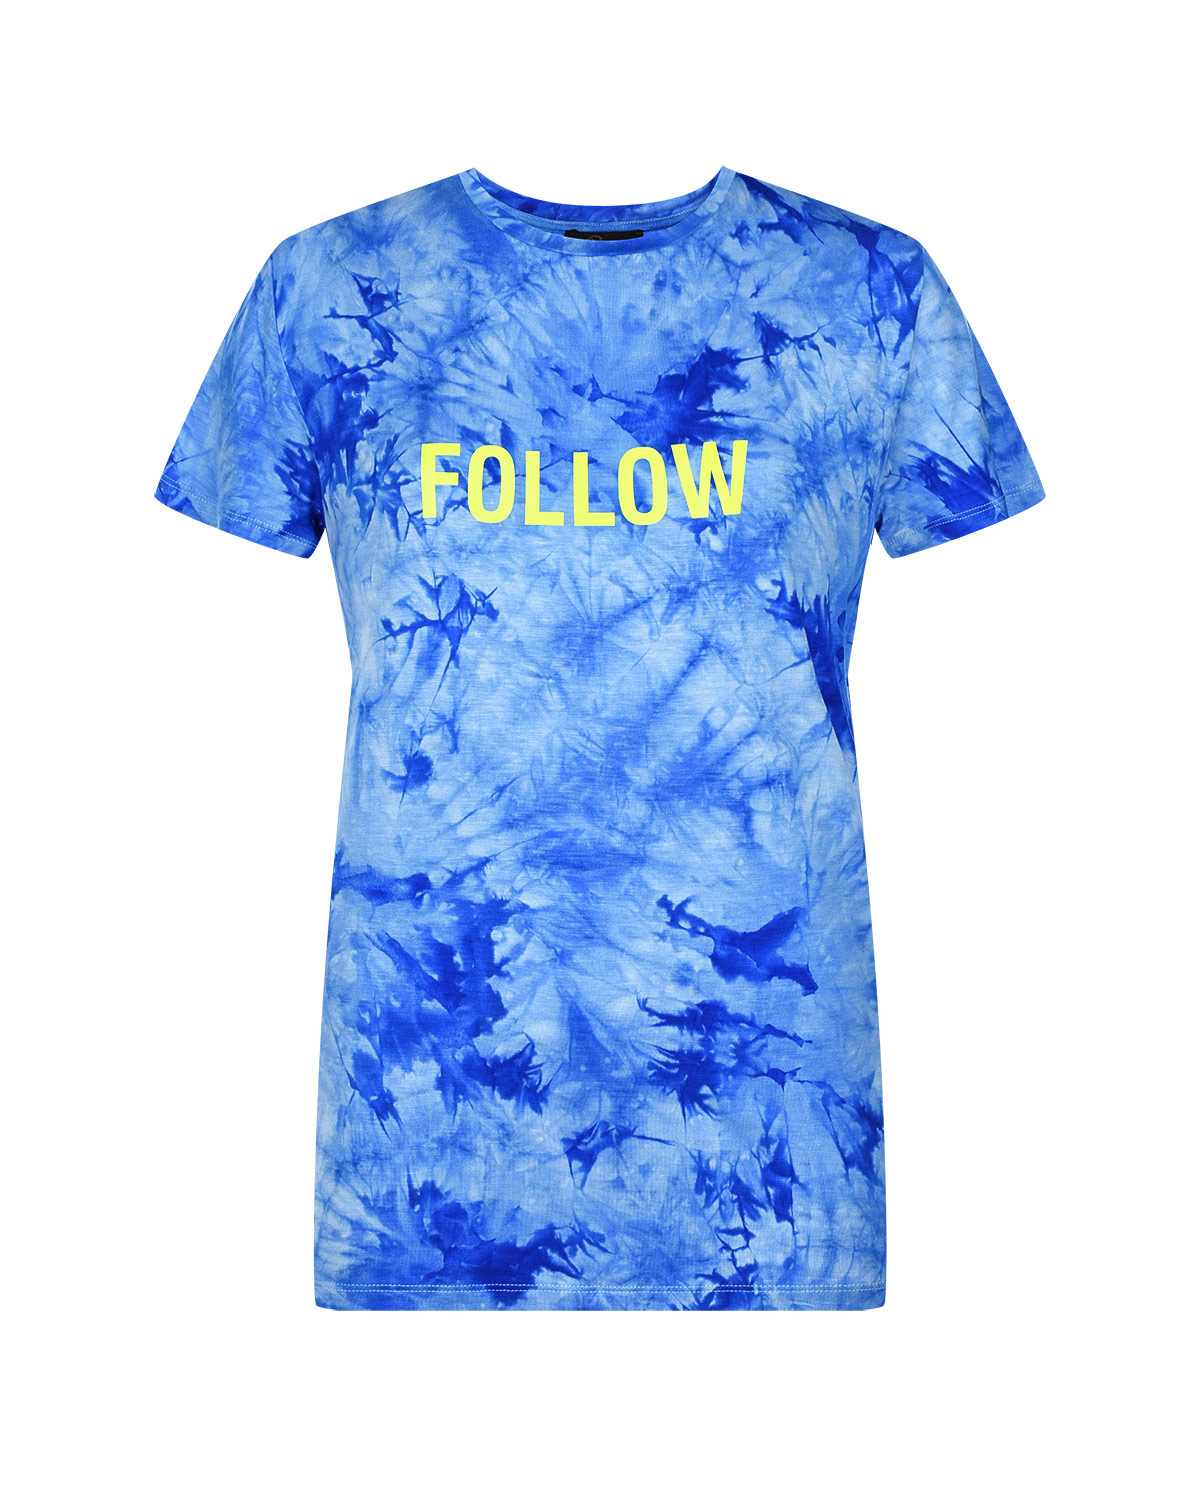 Синяя футболка с надписью "FOLLOW" Dan Maralex, размер 44, цвет нет цвета - фото 1